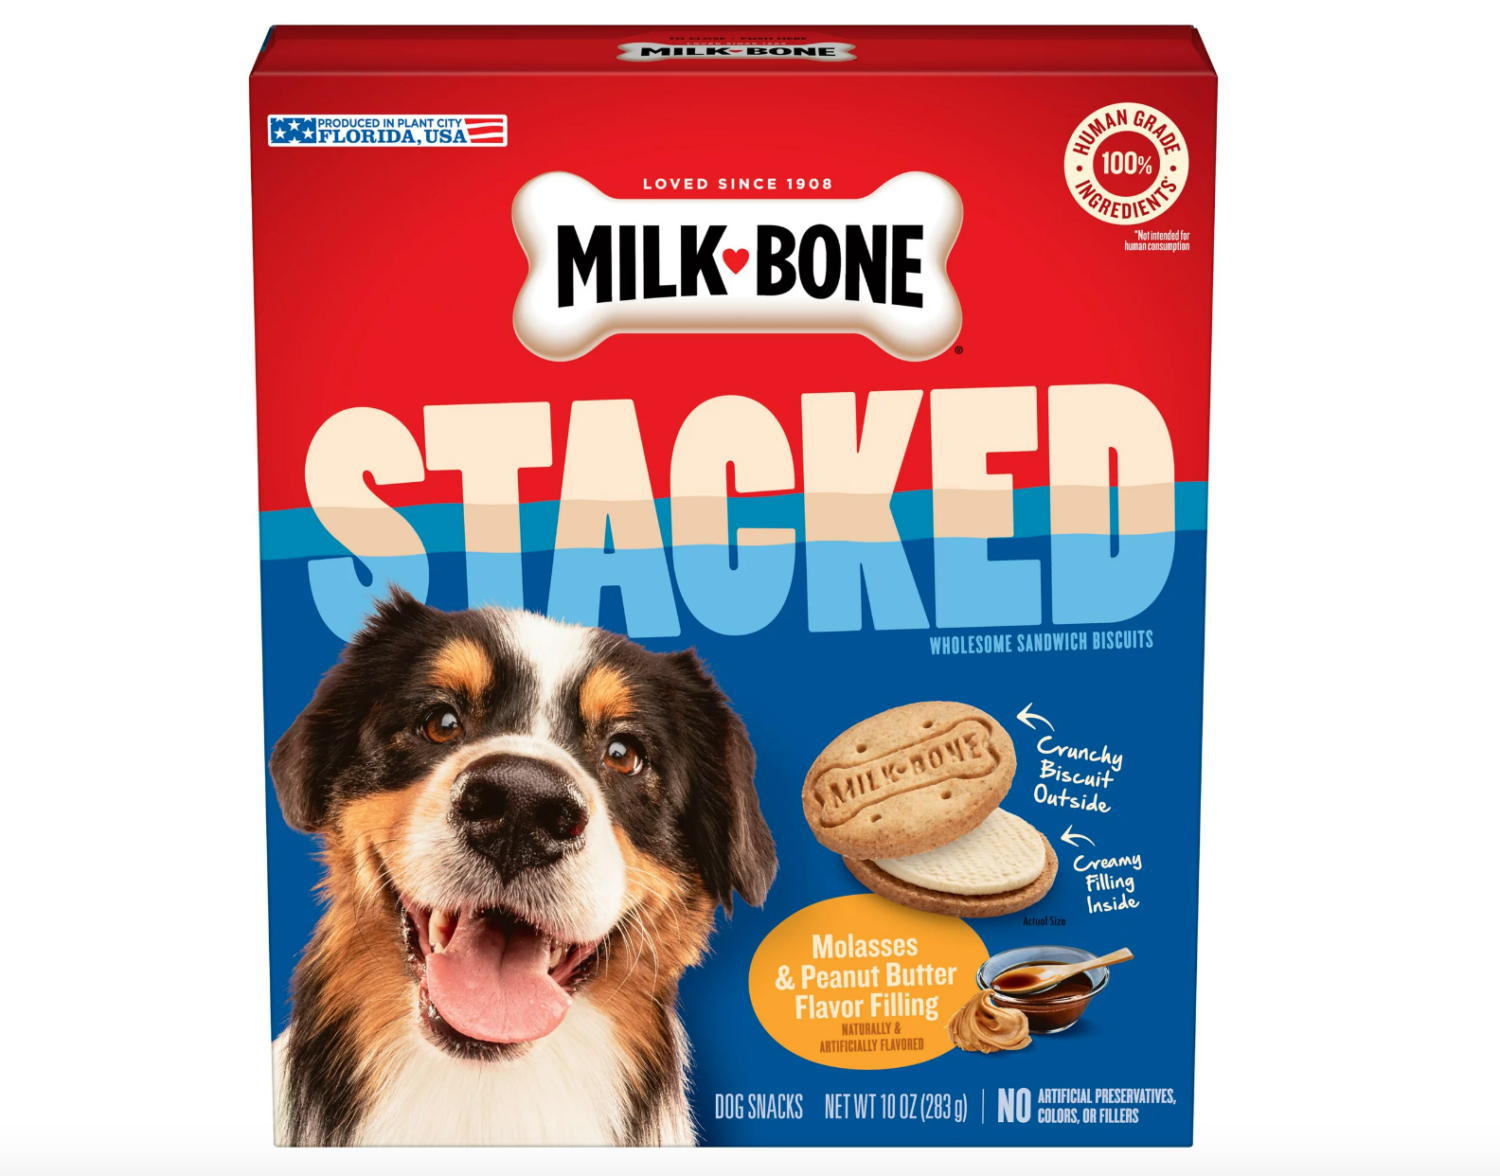 Milk-Bone Stacked dog treats